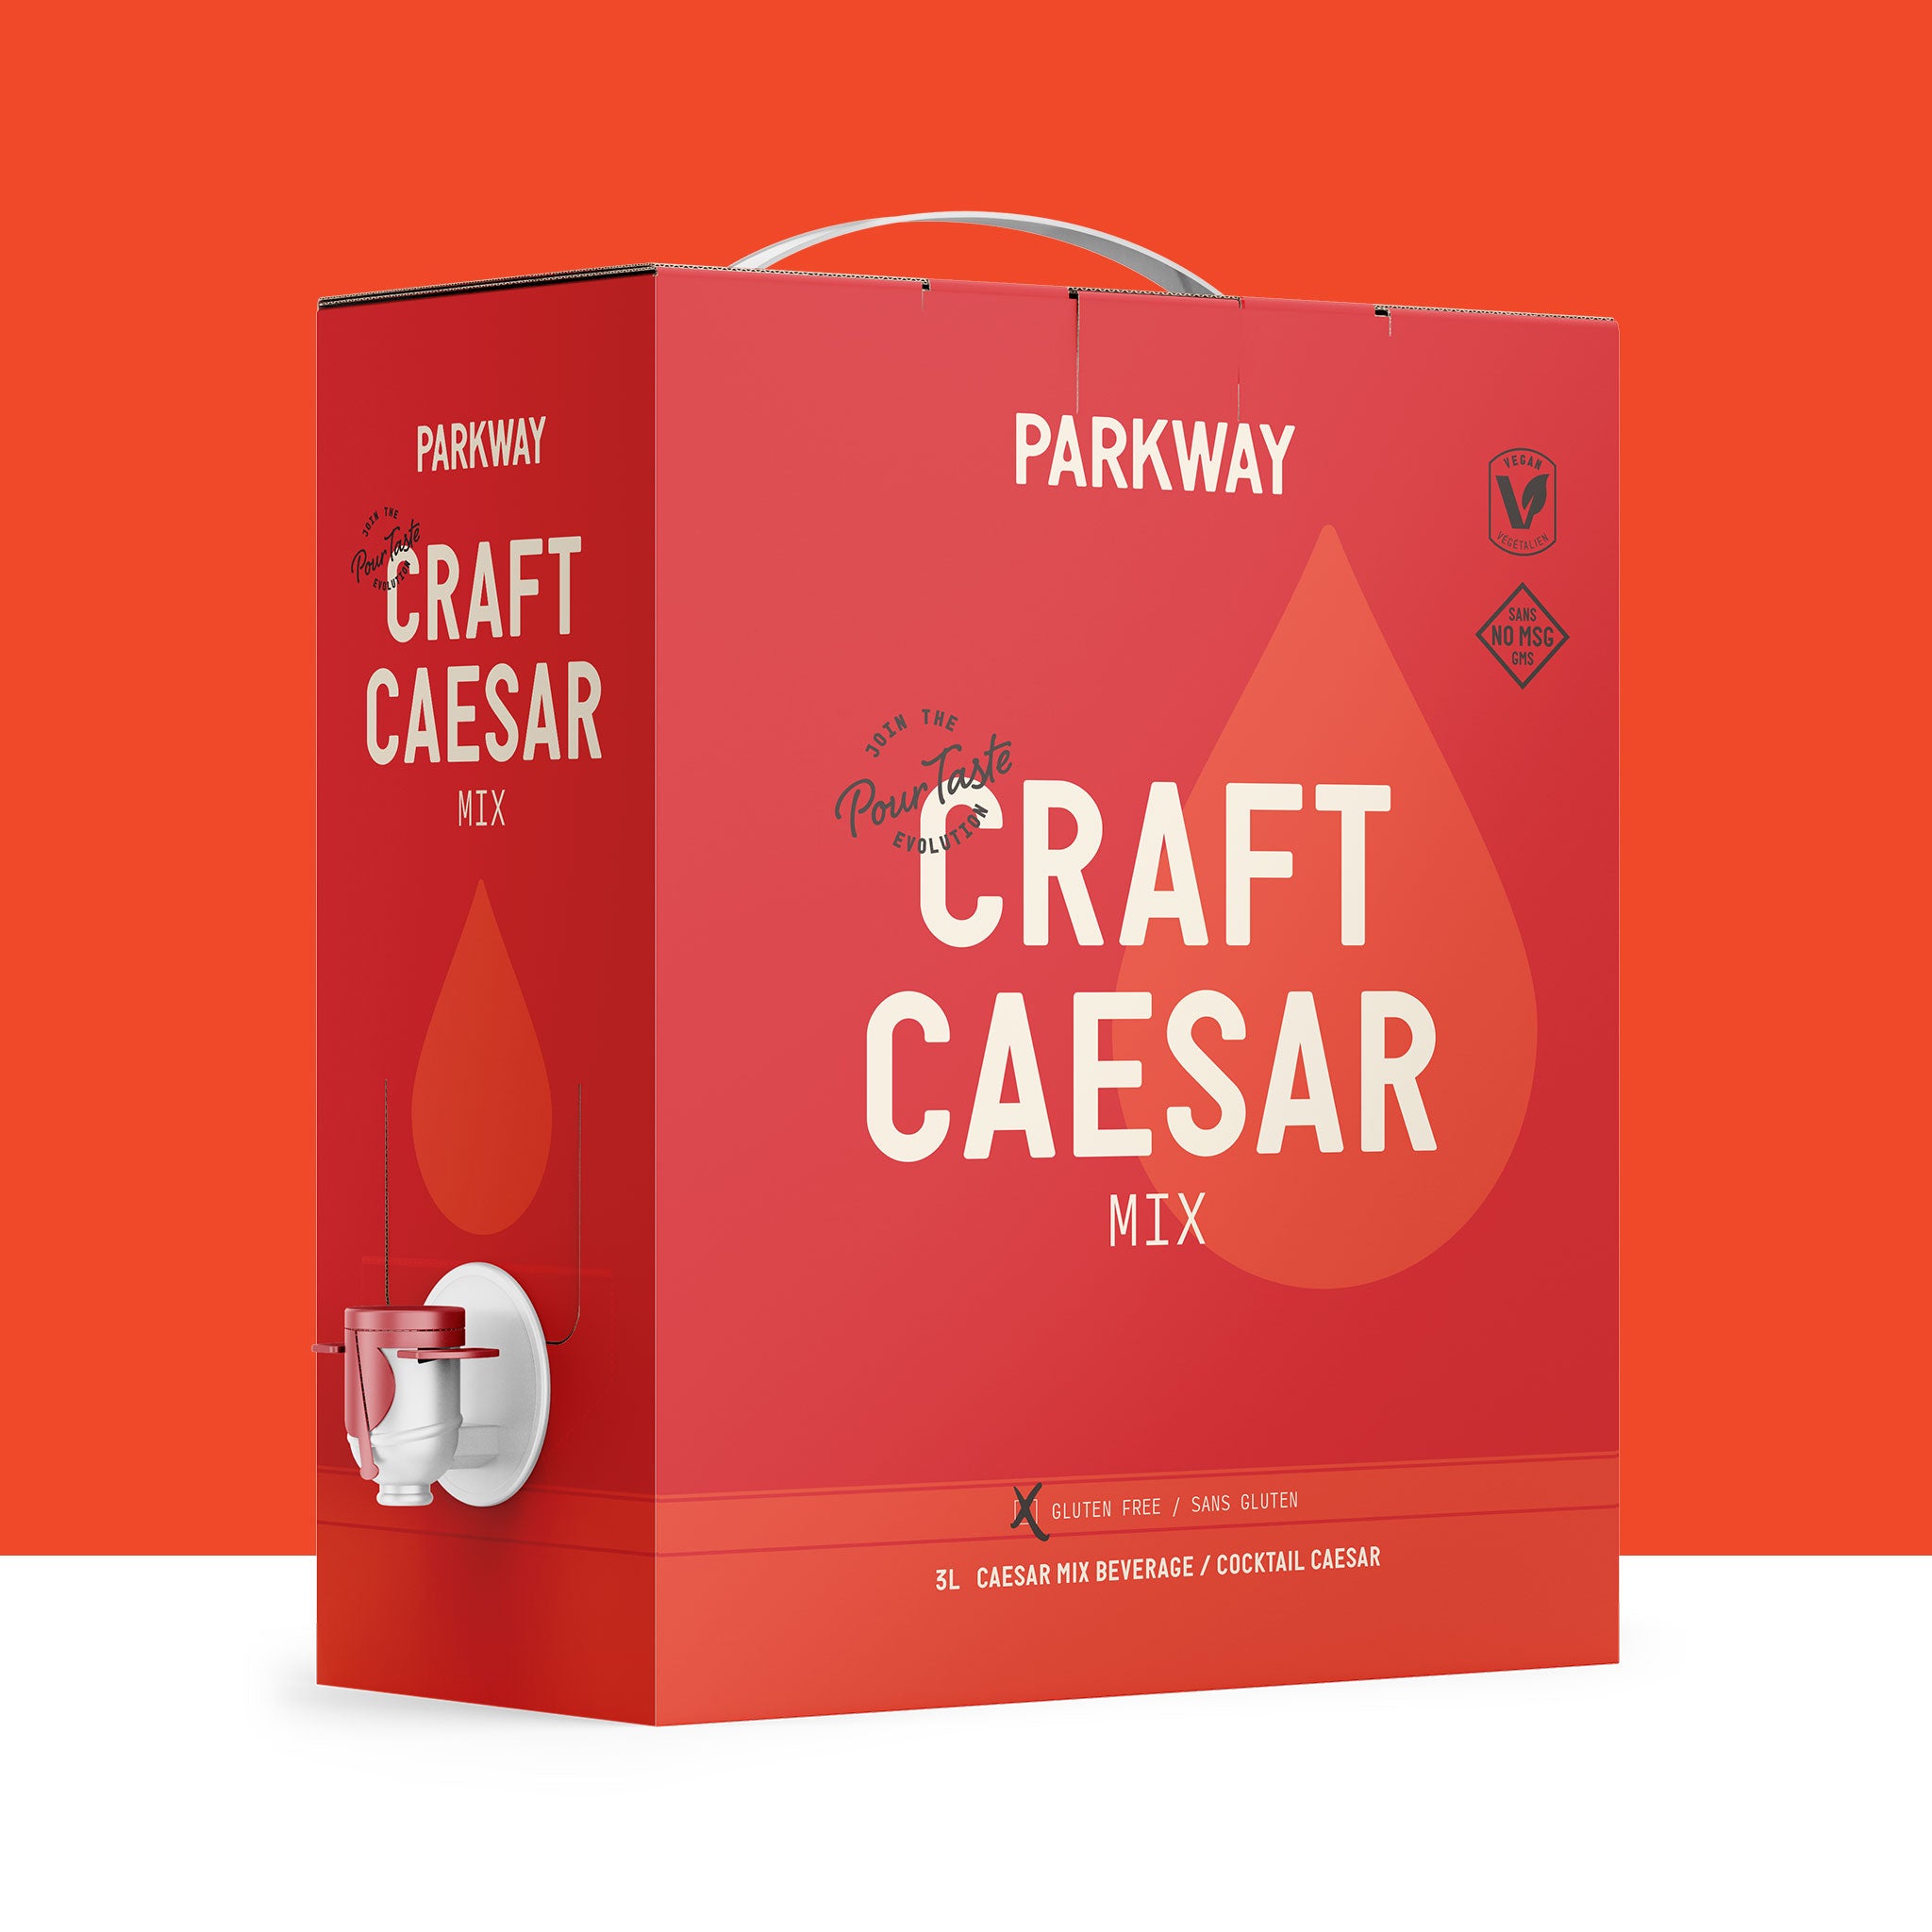 Craft Caesar Bag-in-box